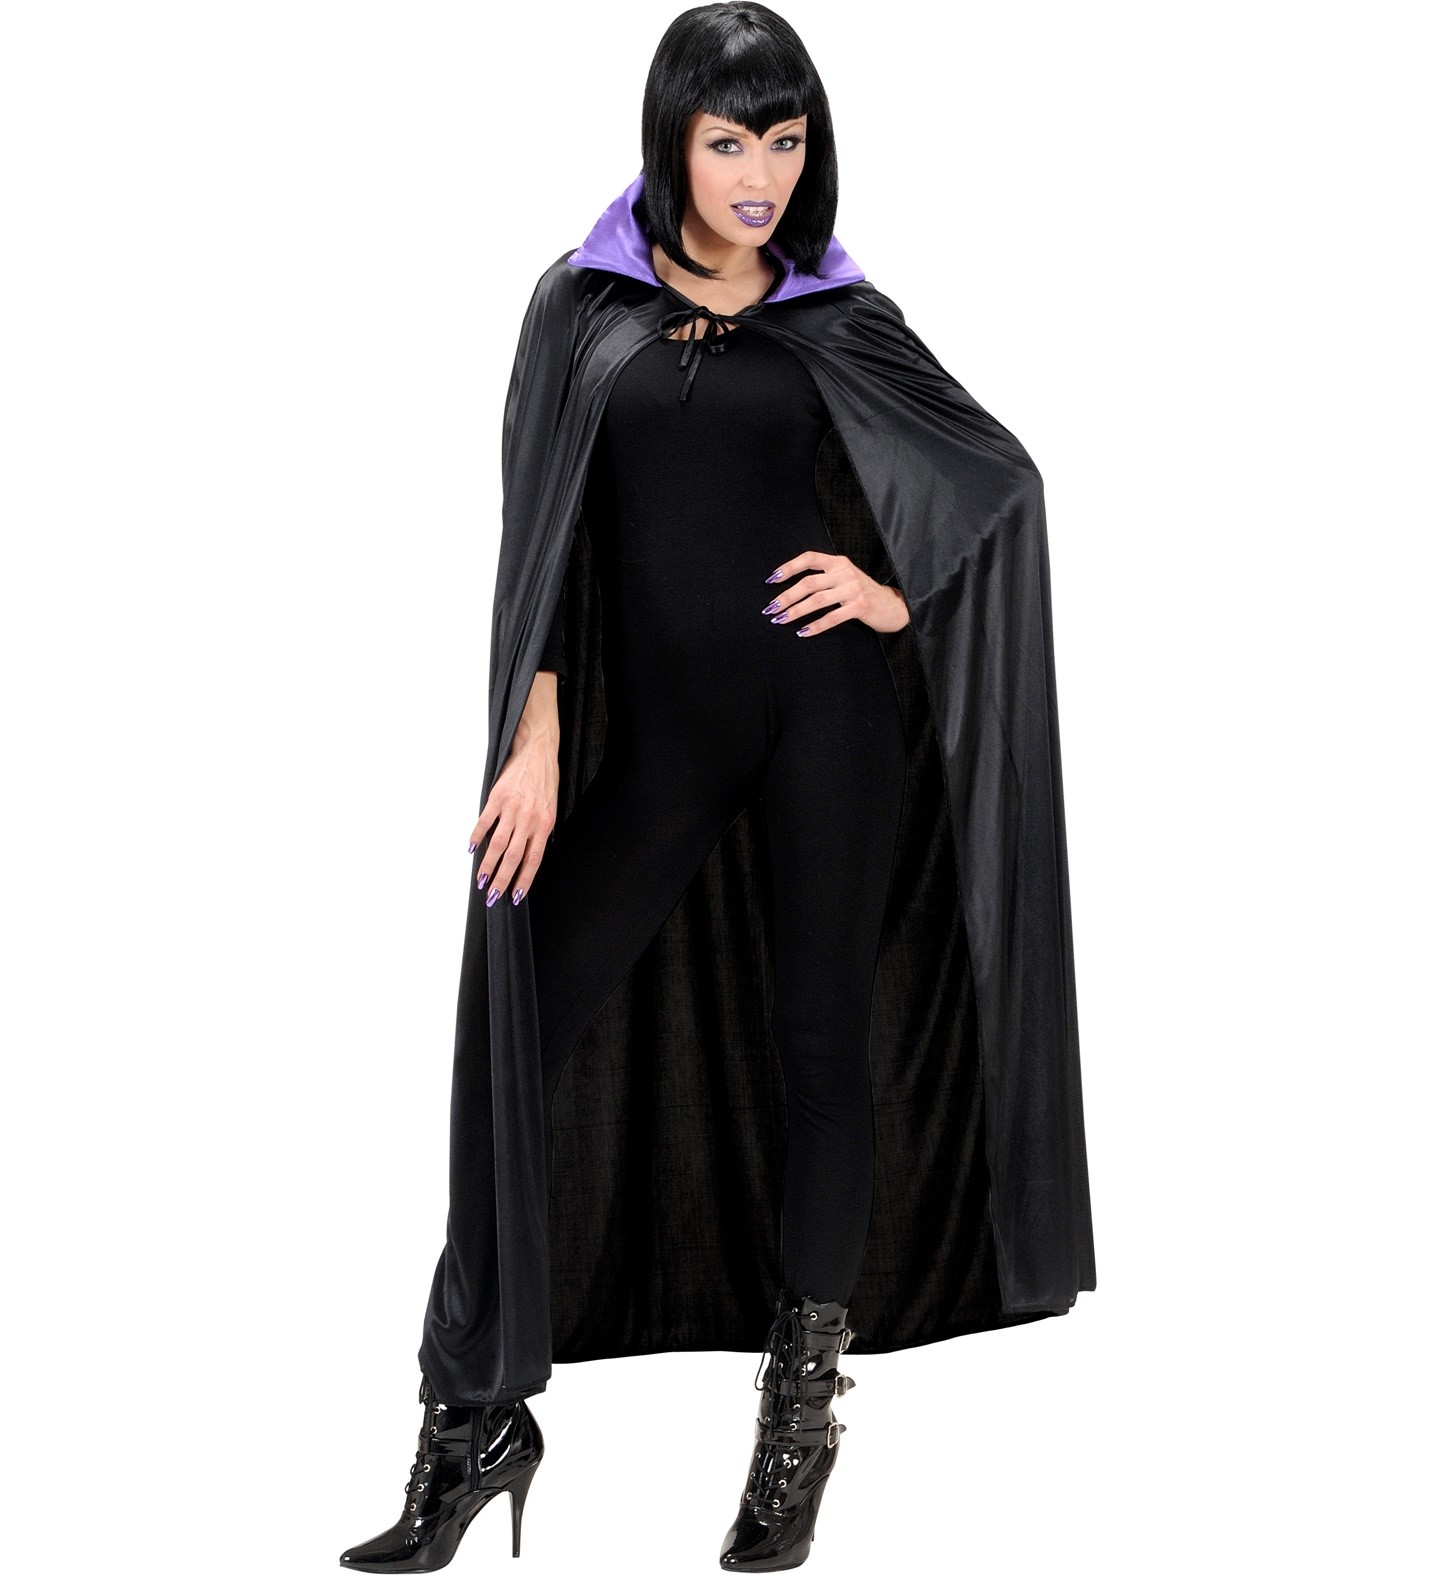 Capa de Halloween para mujer, malvada de bruja, para cosplay, steampunk,  cuello de plumas negras, capa de vampiro, disfraz de carnaval, accesorios  de